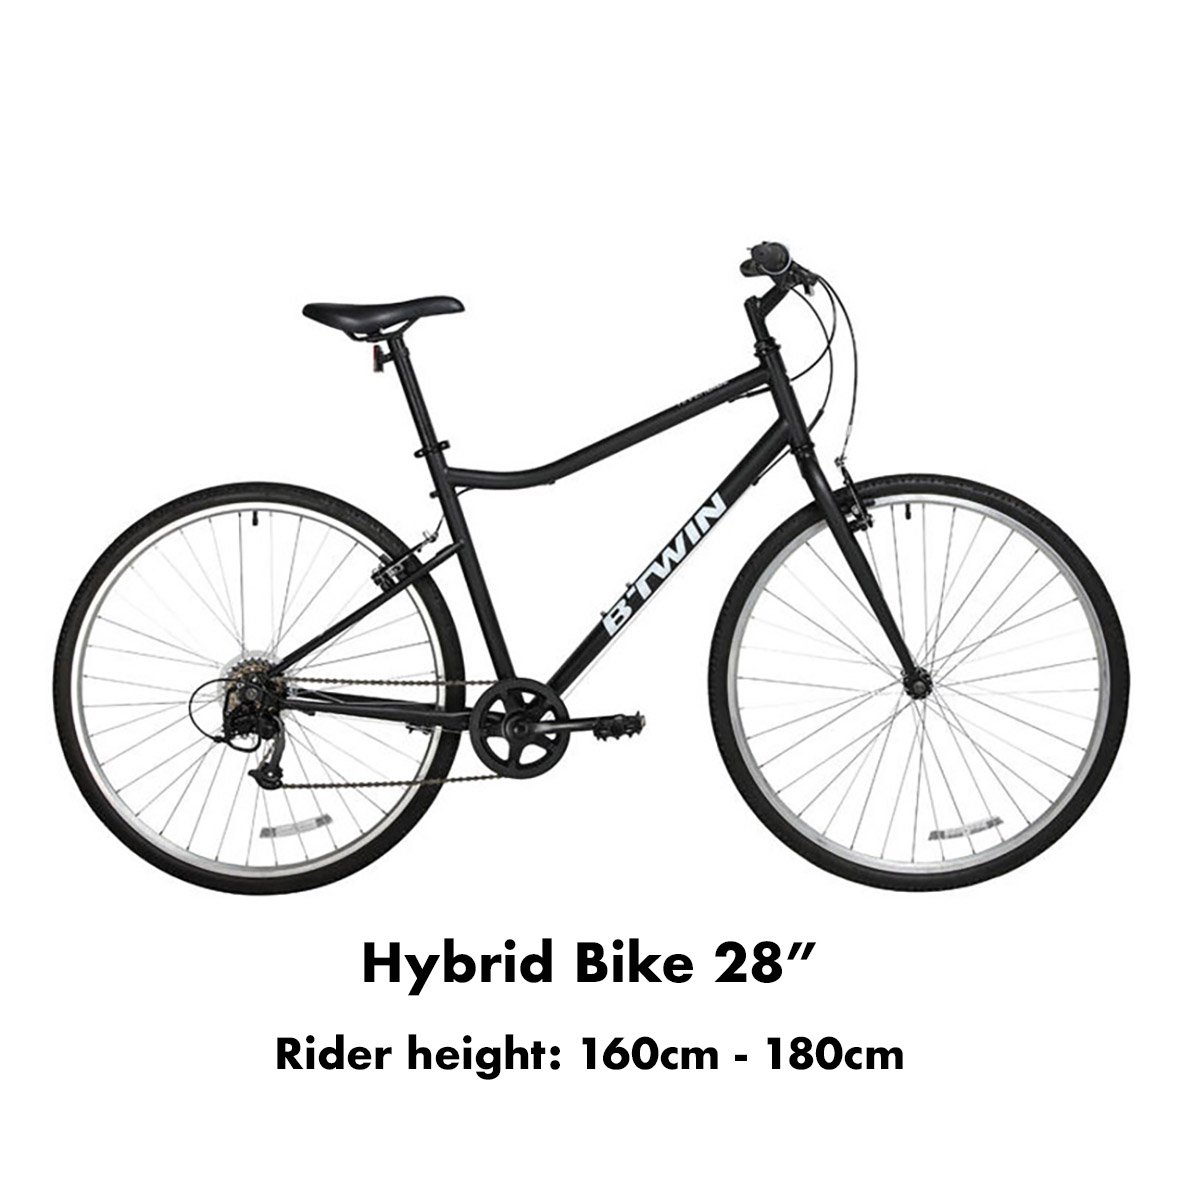 Hybrid Bike 28_ with description.jpg